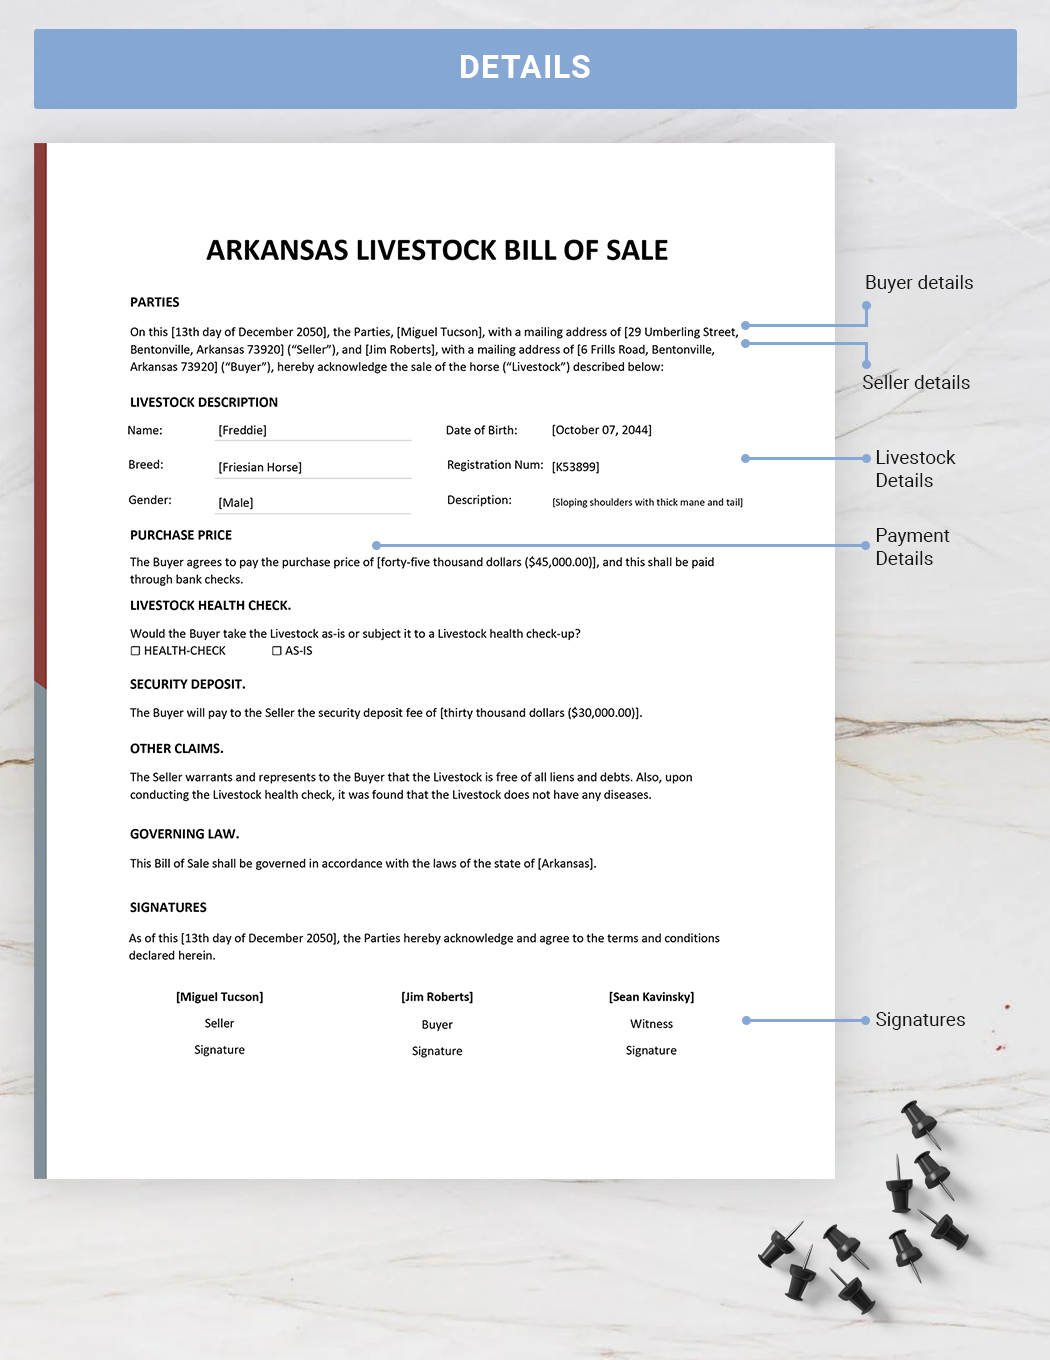 Arkansas Livestock Bill of Sale Template